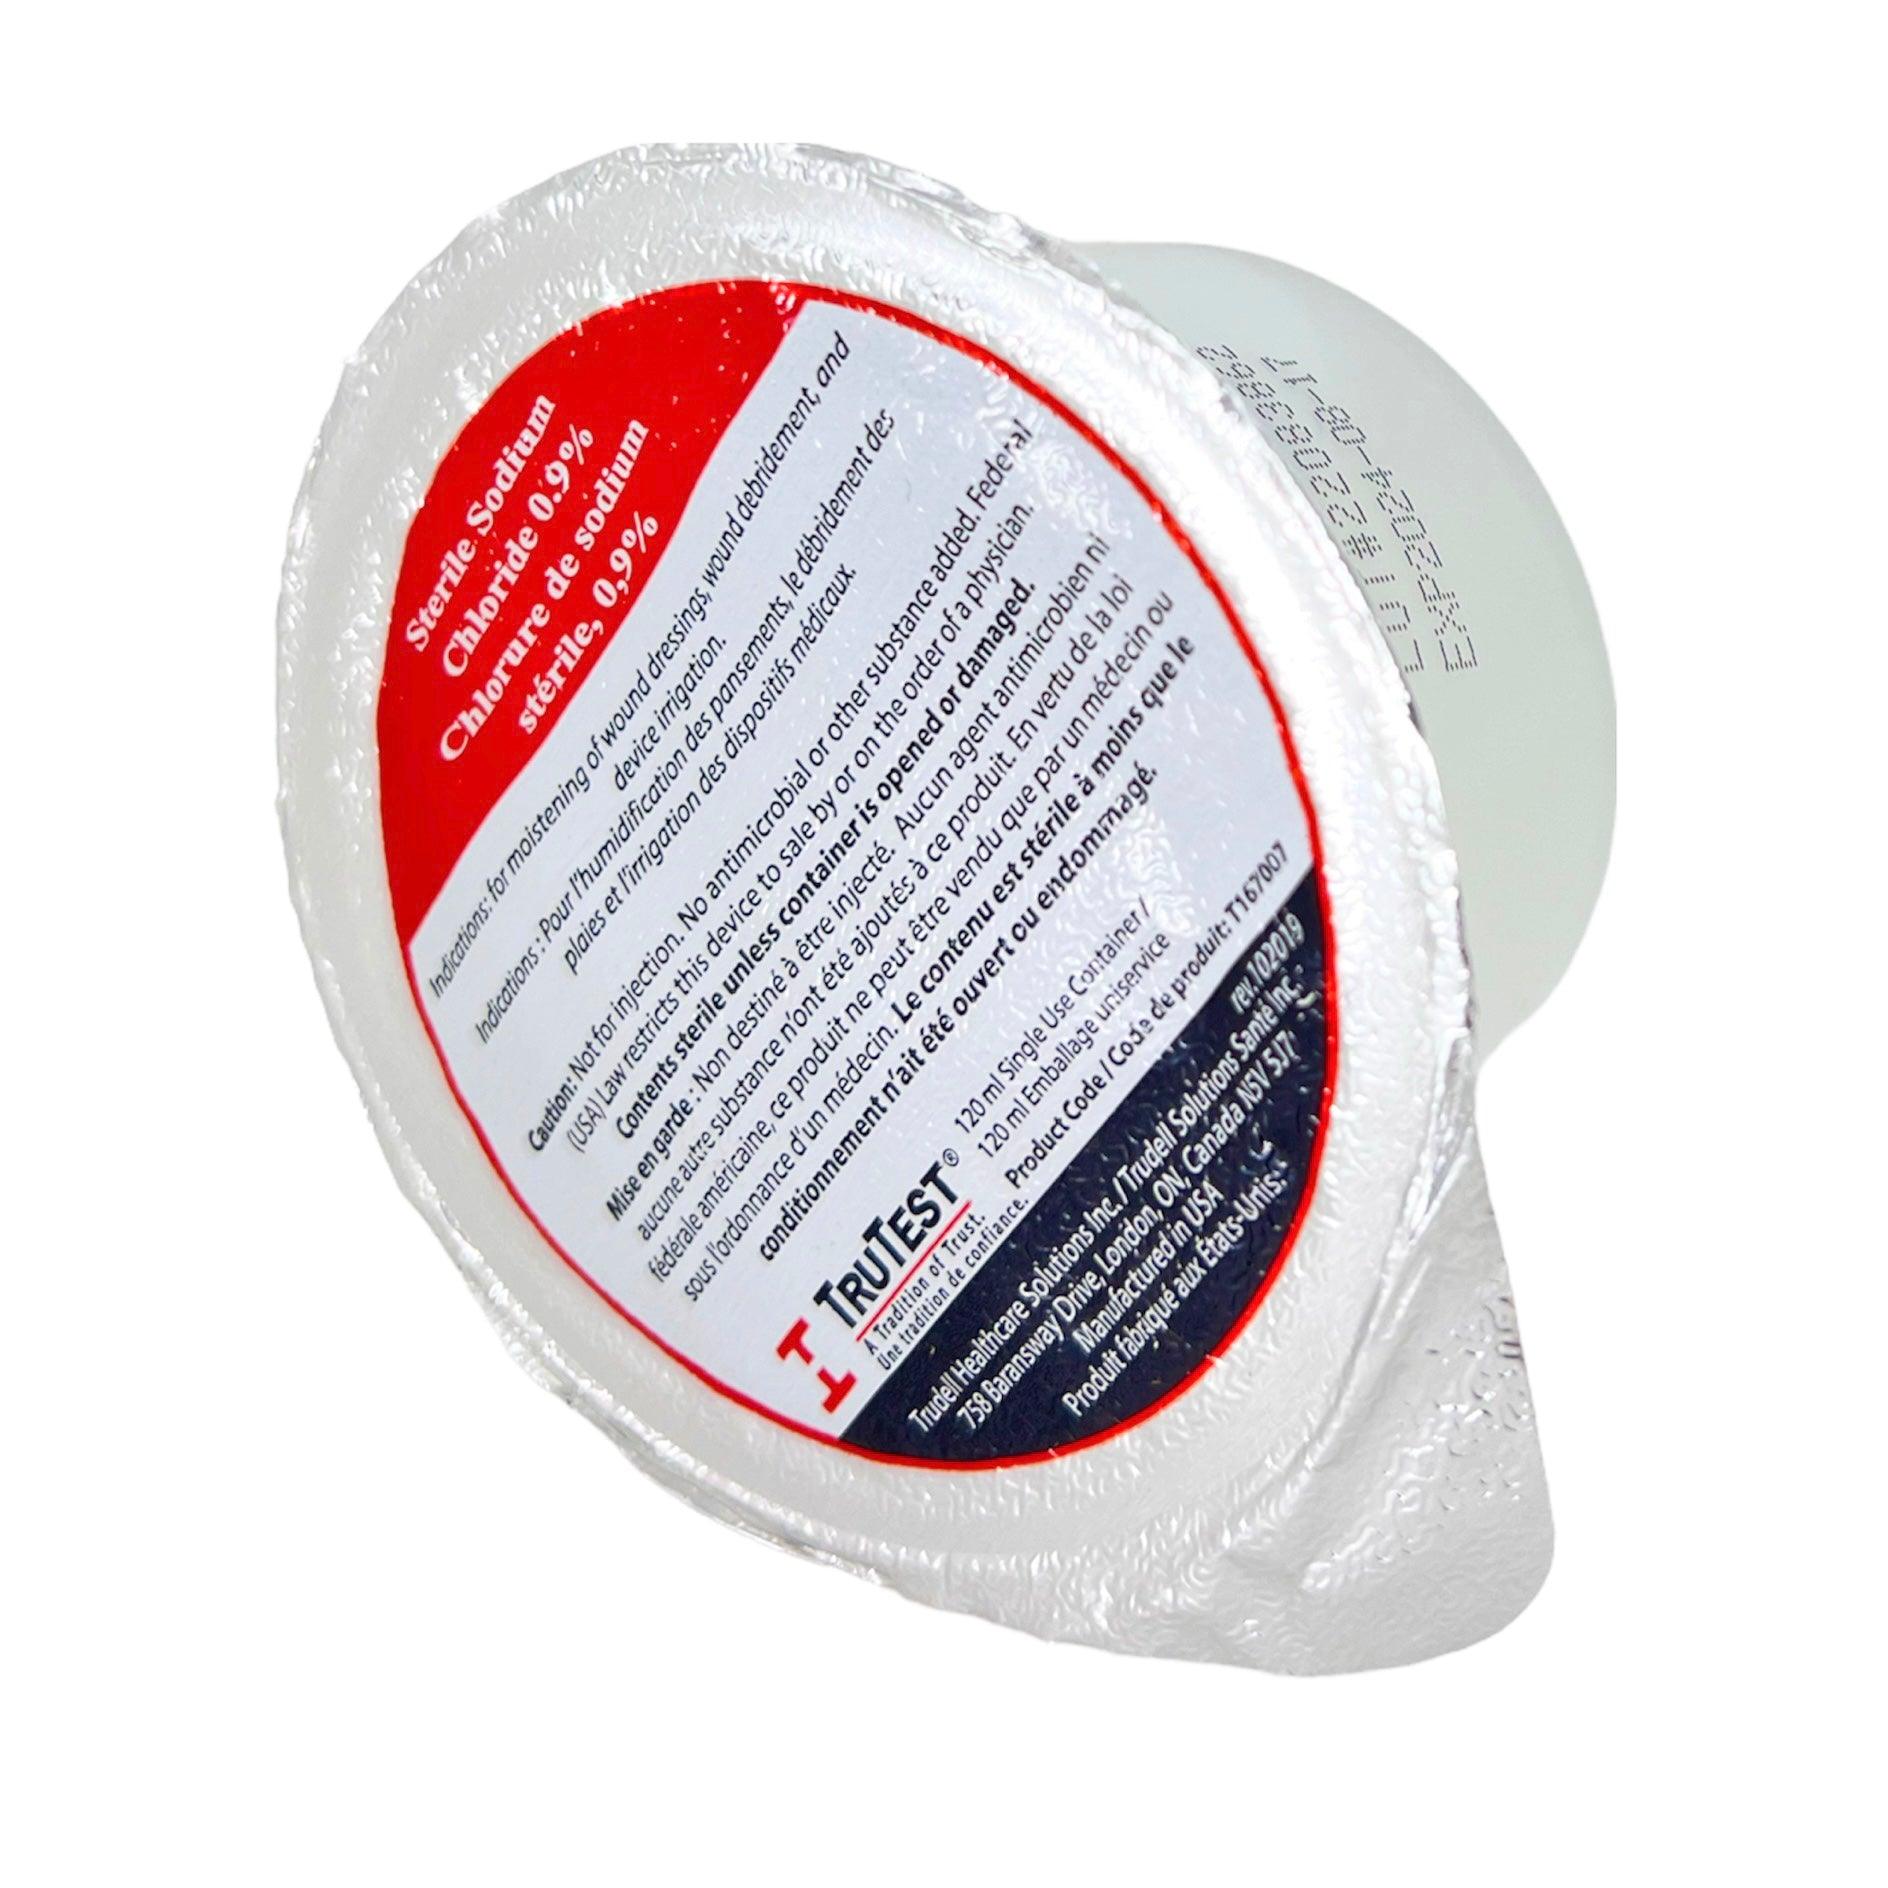 TRUTEST Sterile Sodium Chloride 0.9% - 120 mL (48 Foil Lid Cup/Case)